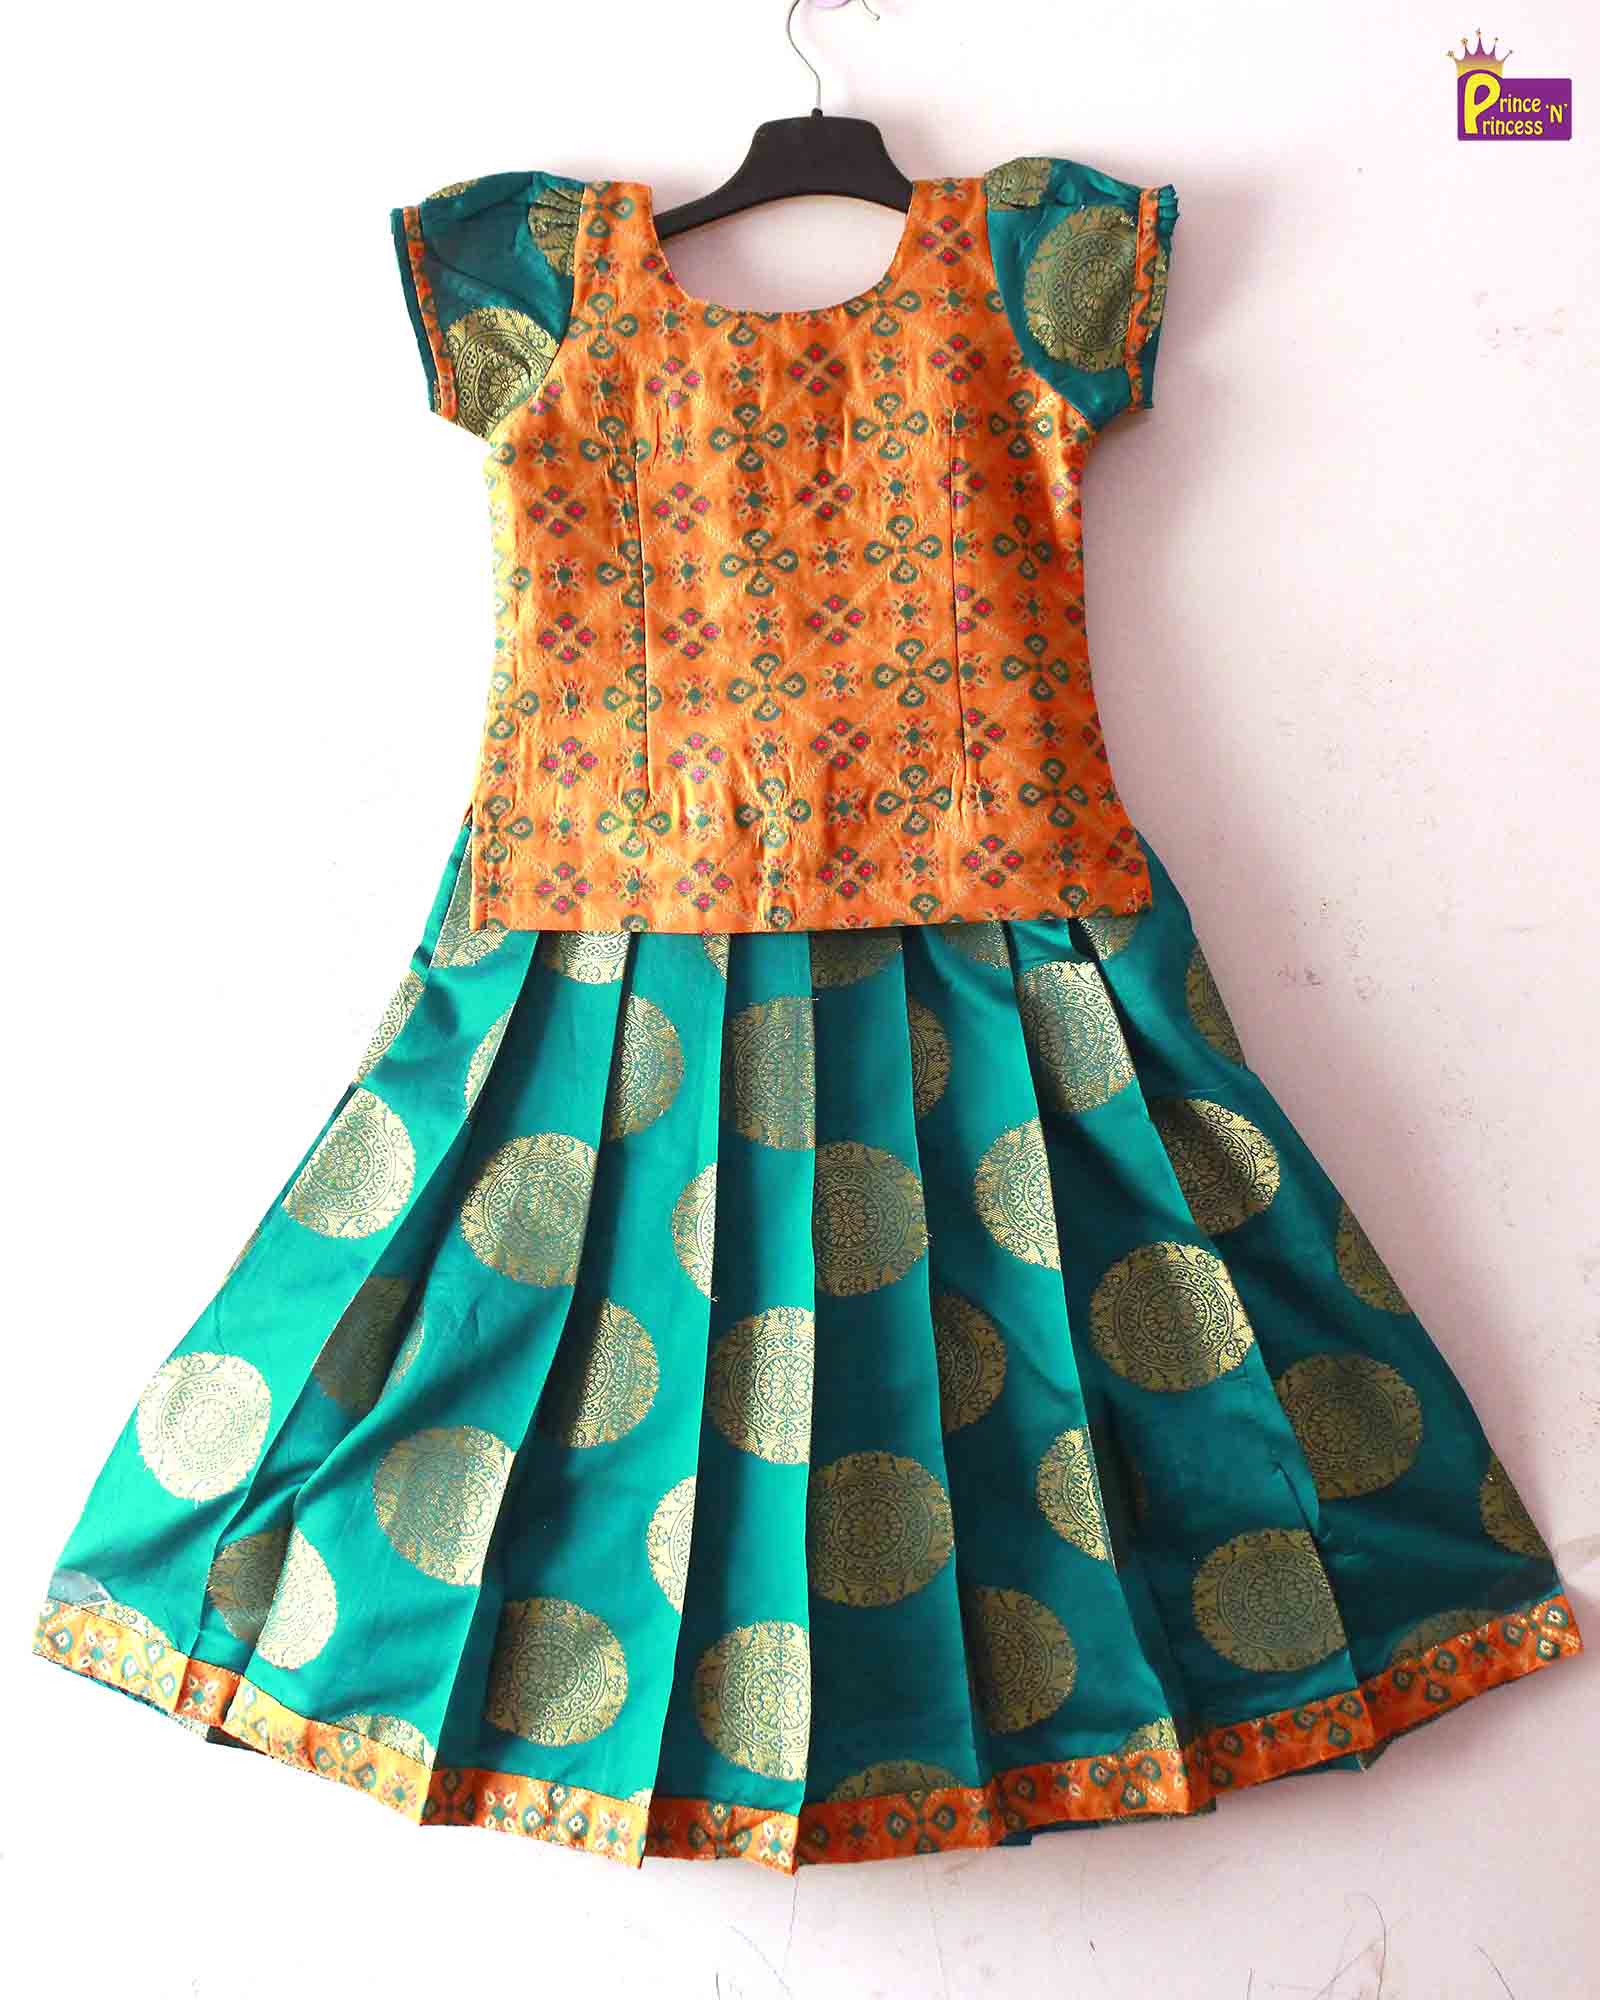 Girls Yello Organze Floral Creeper Cute Pattu Pavadai Dress at 2895.00 INR  in Coimbatore | Shivangi Clothing